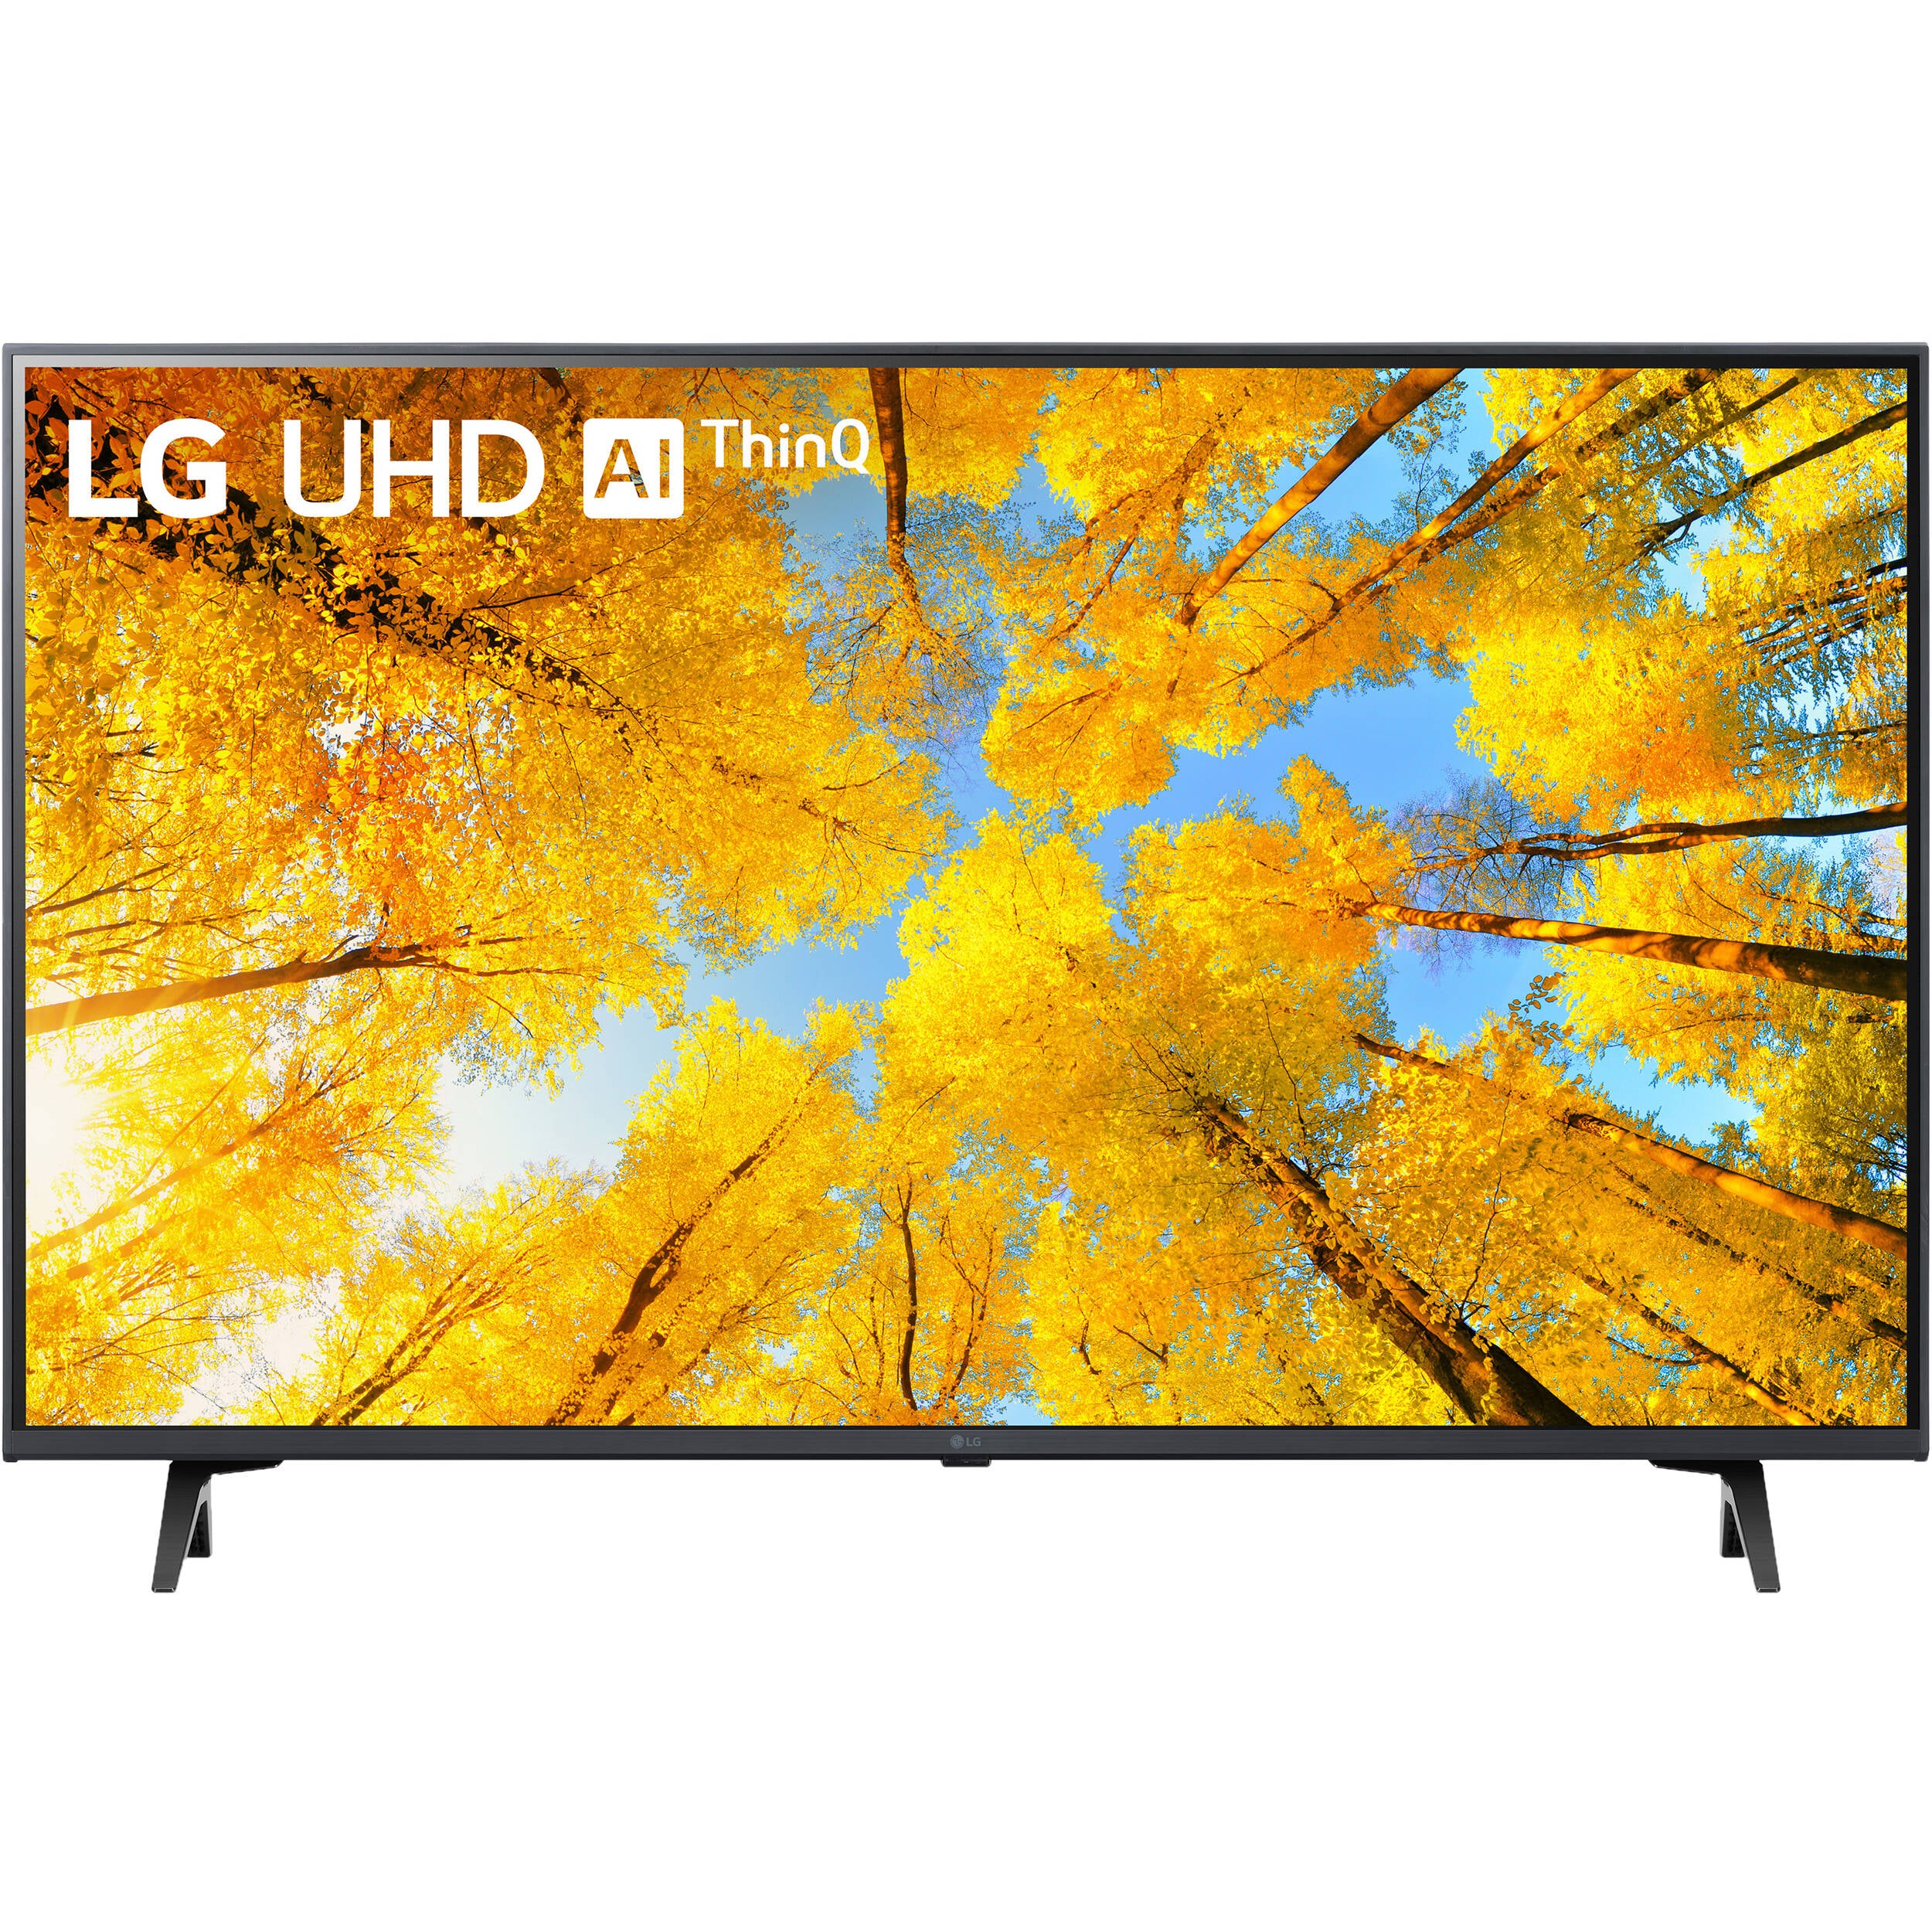 LG UQ7590 Series LED 4K UHD TV